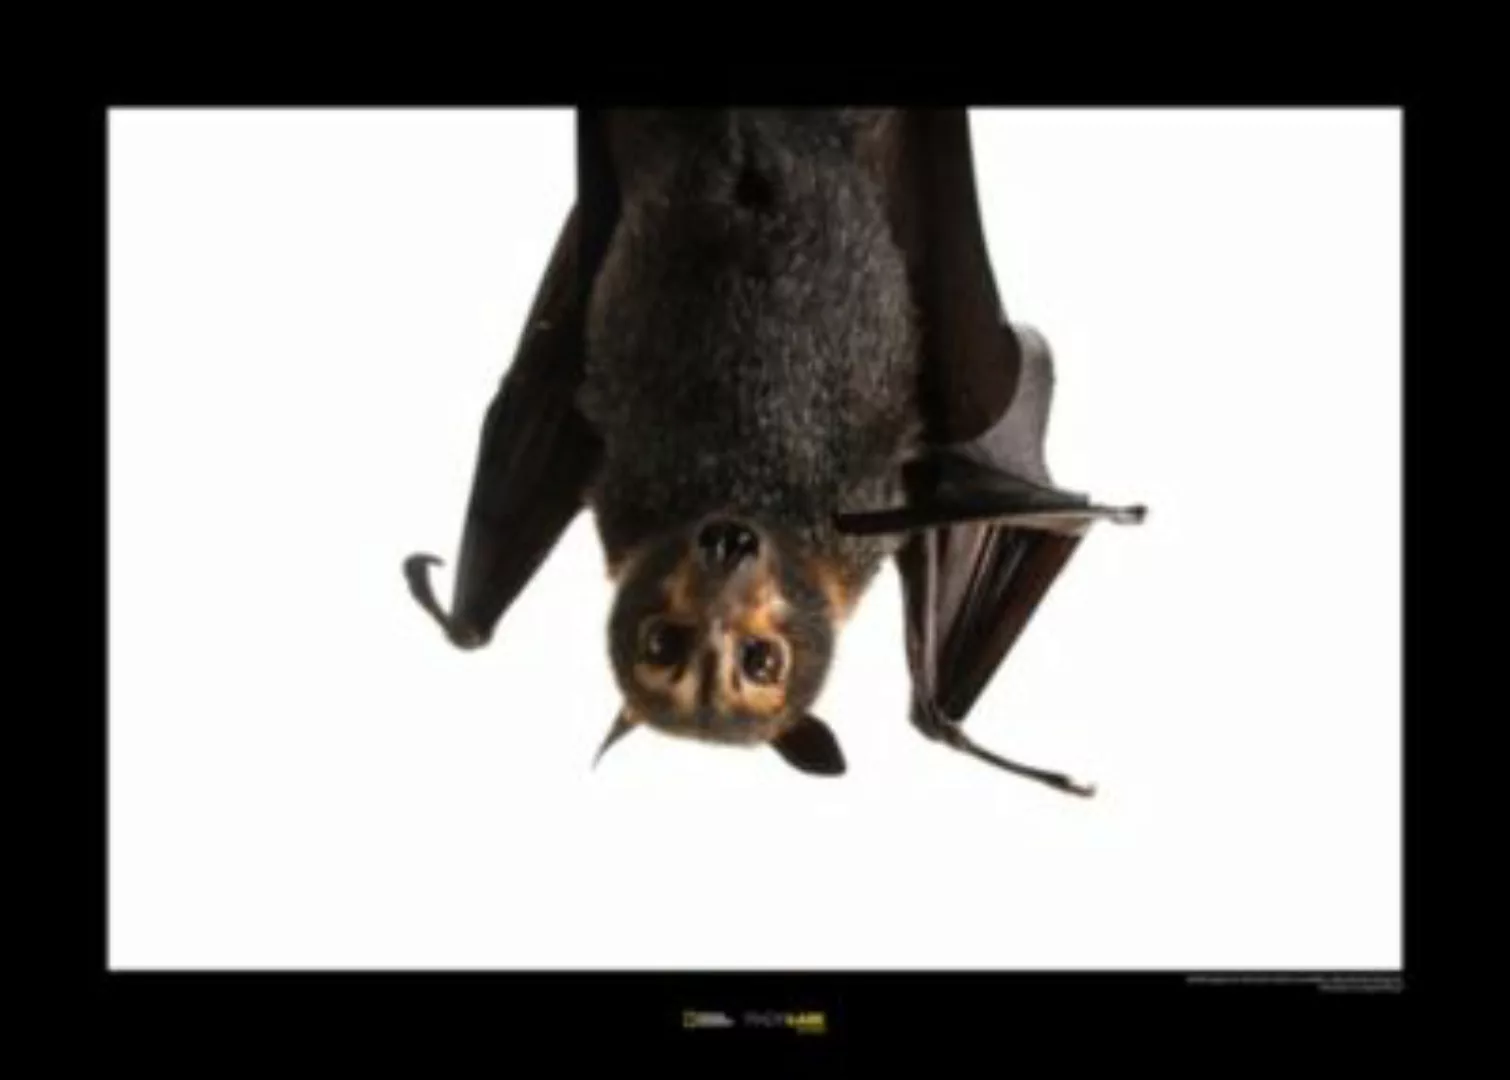 KOMAR Wandbild - Spectacled Flying Fox - Größe: 70 x 50 cm mehrfarbig Gr. o günstig online kaufen